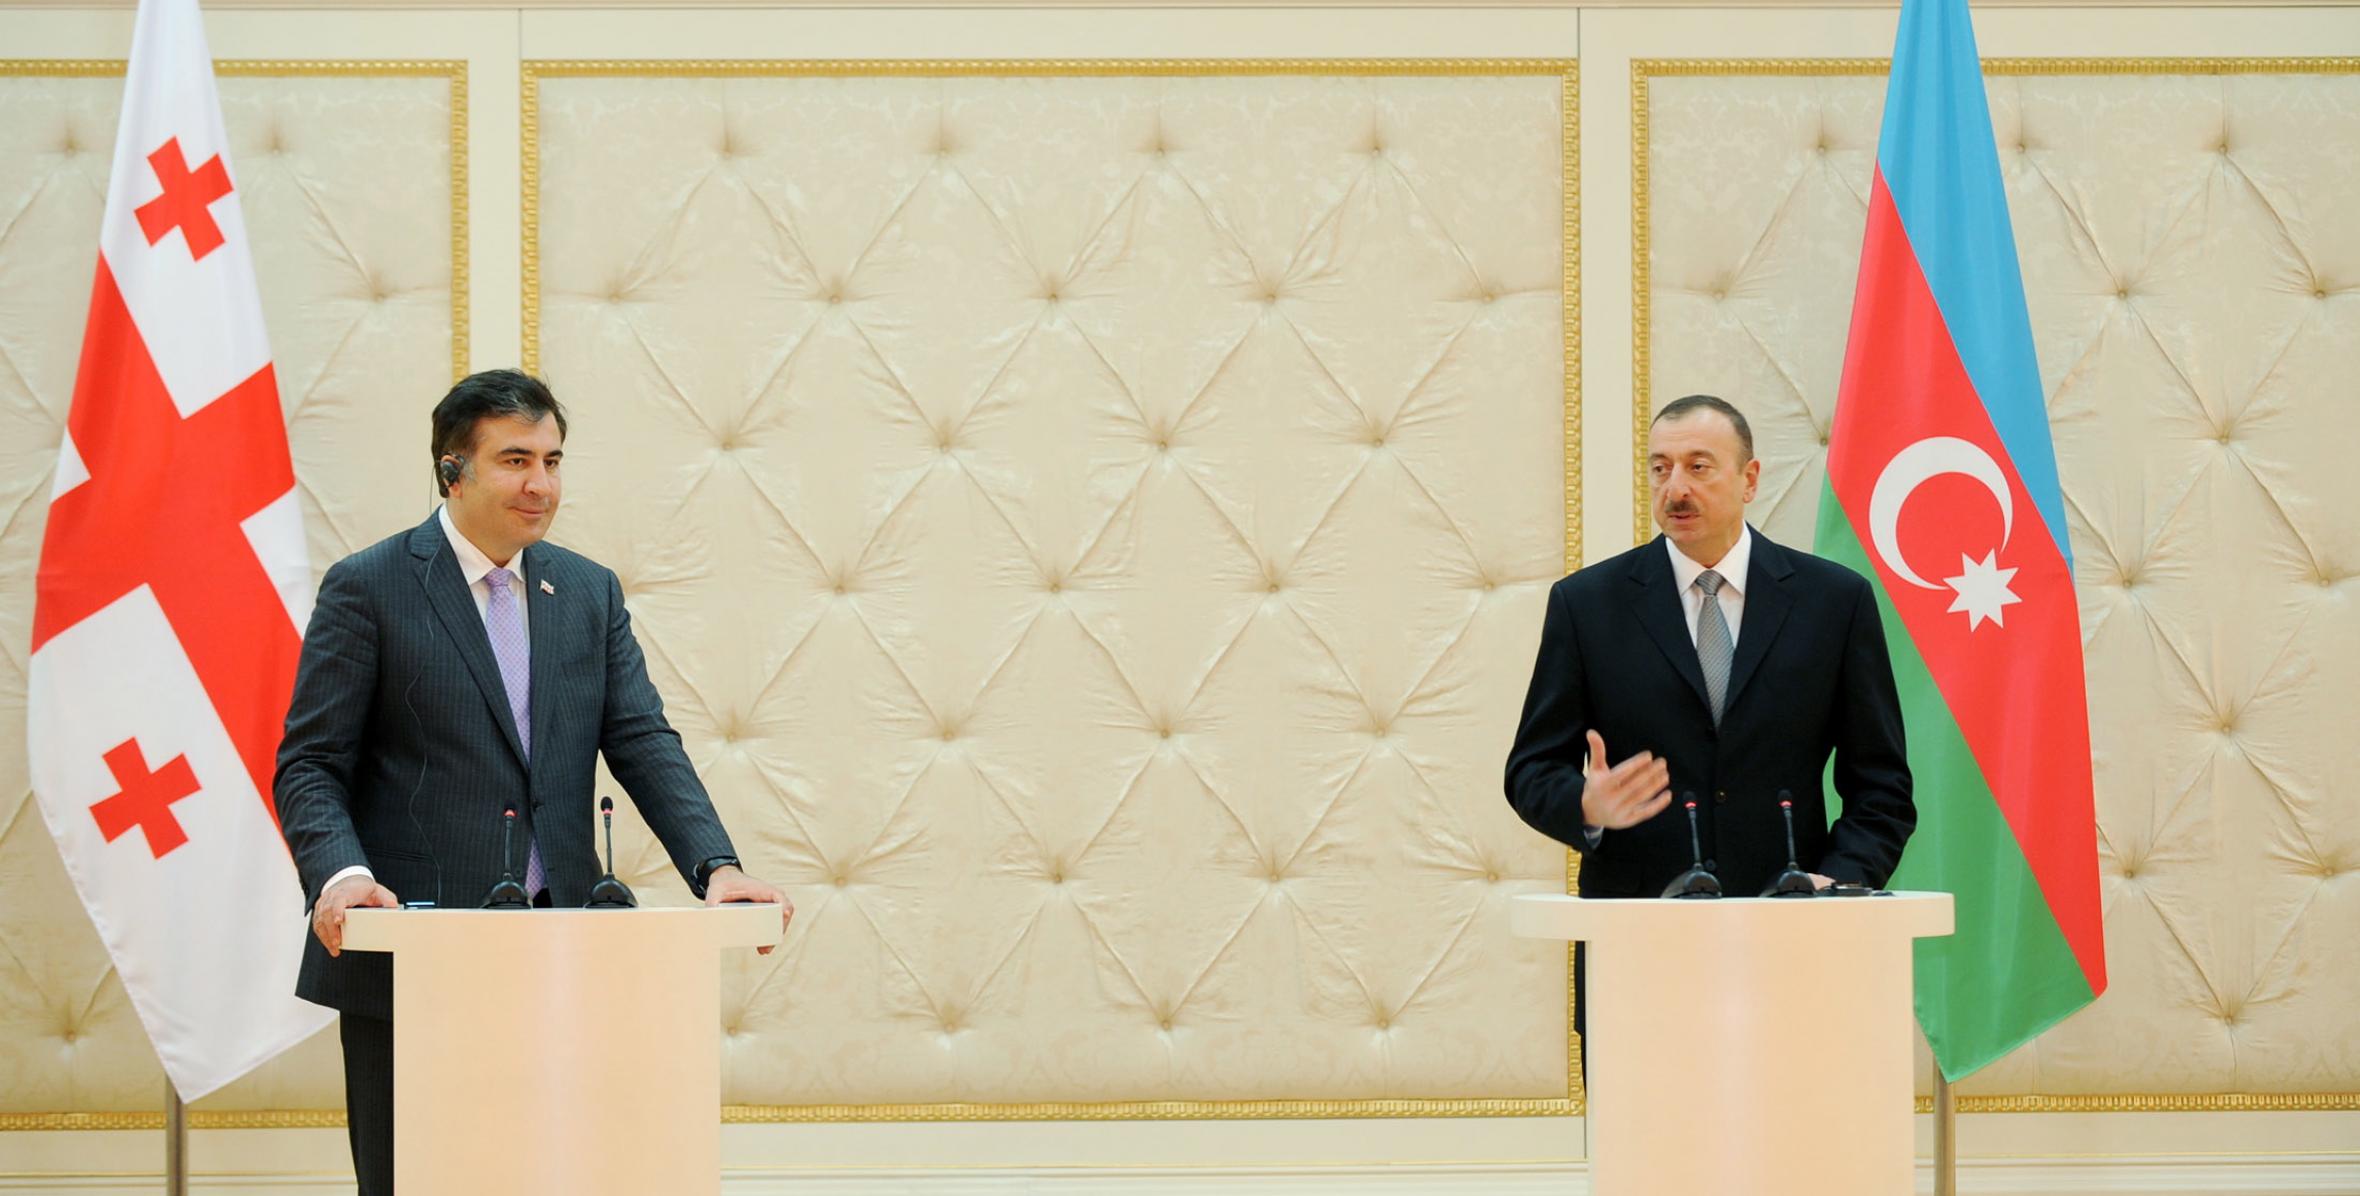 Ilham Aliyev and President of Georgia Mikheil Saakashvili made statements for the press